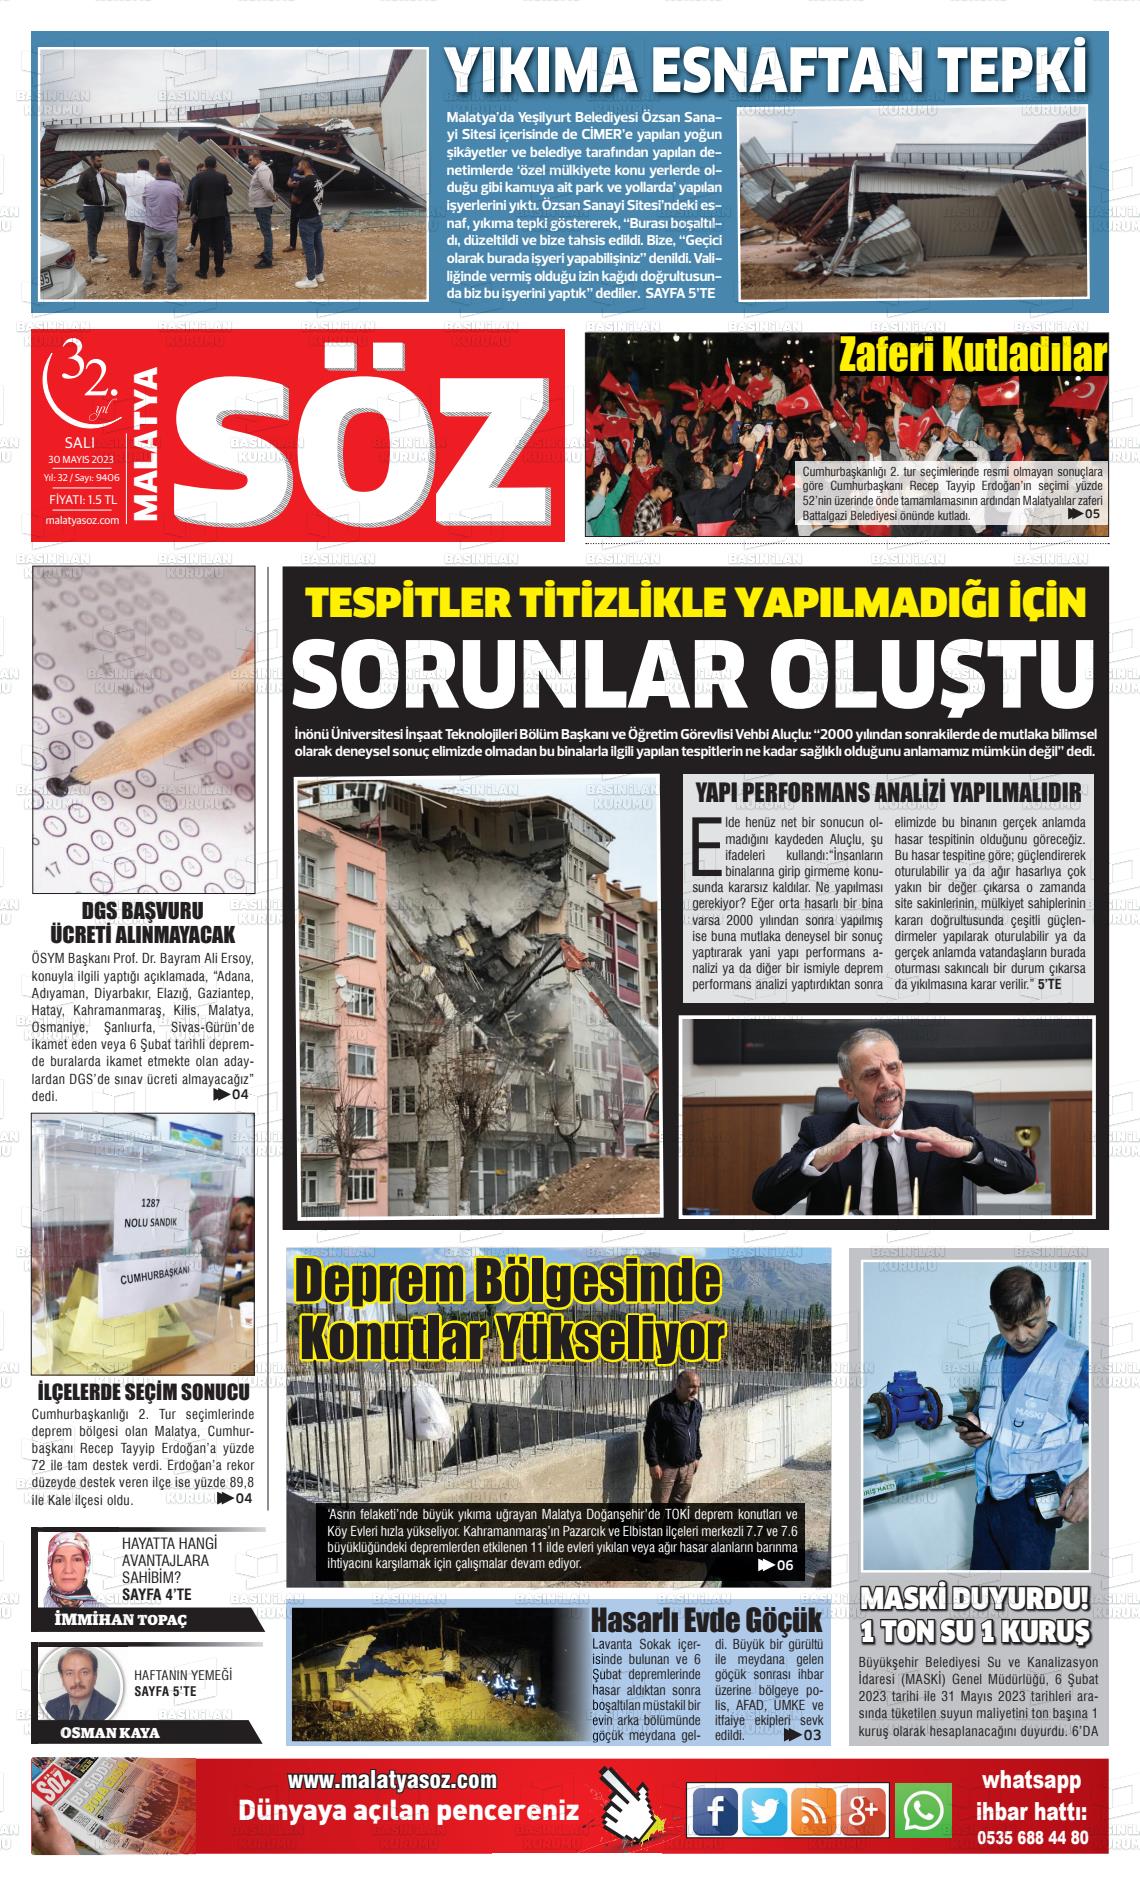 Malatya Söz gazetesi manşet ilk sayfa oku